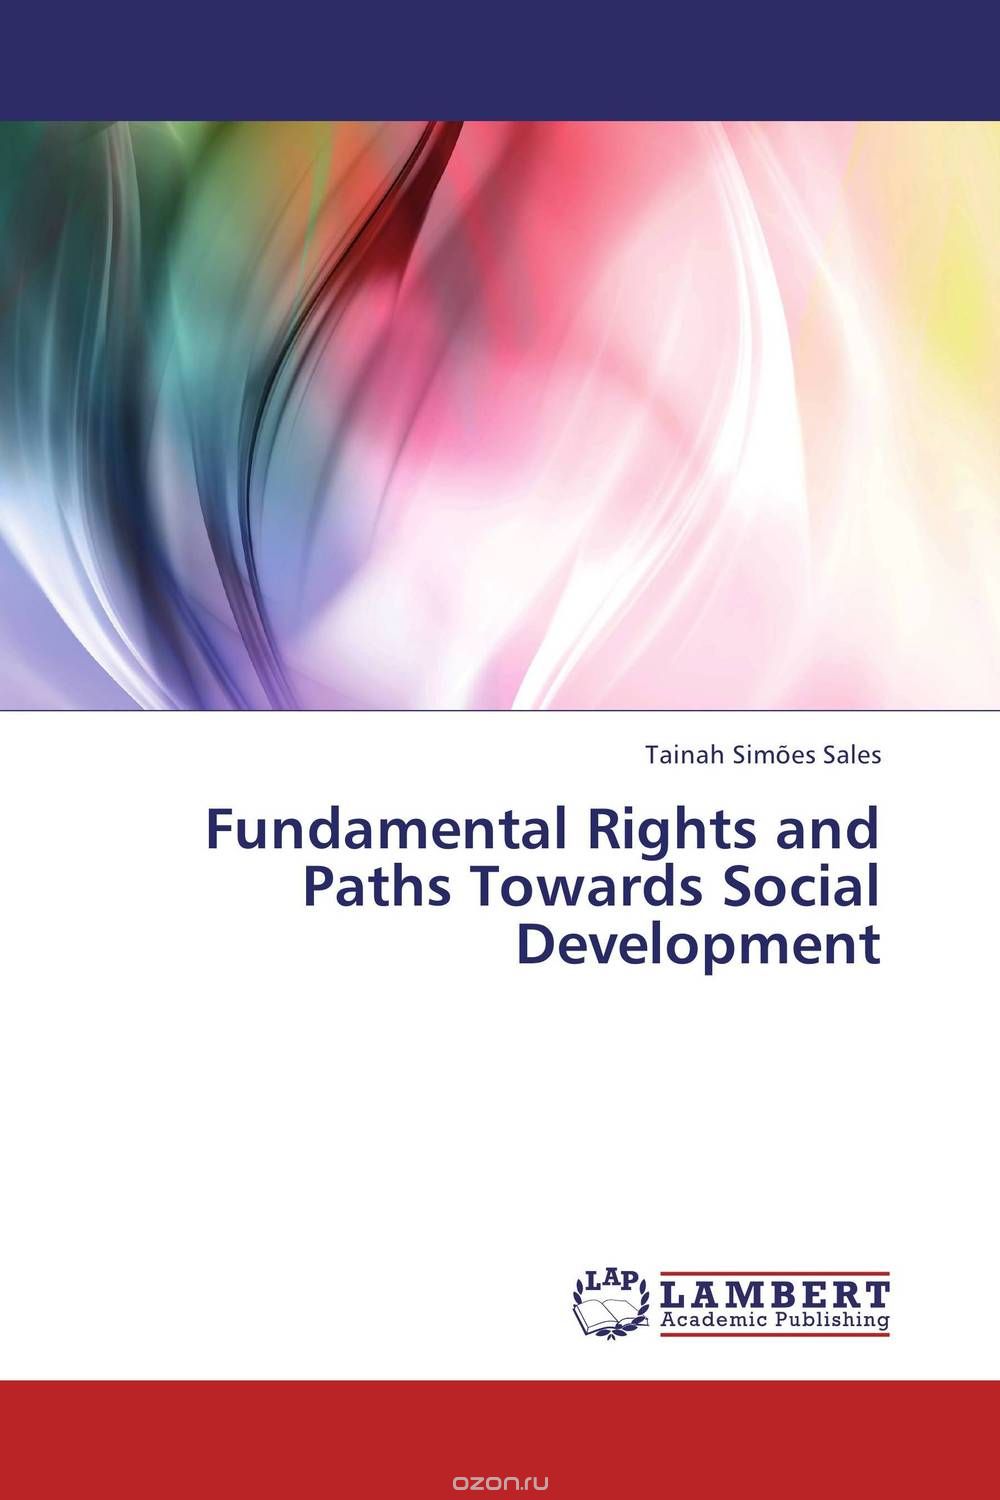 Скачать книгу "Fundamental Rights and Paths Towards Social Development"